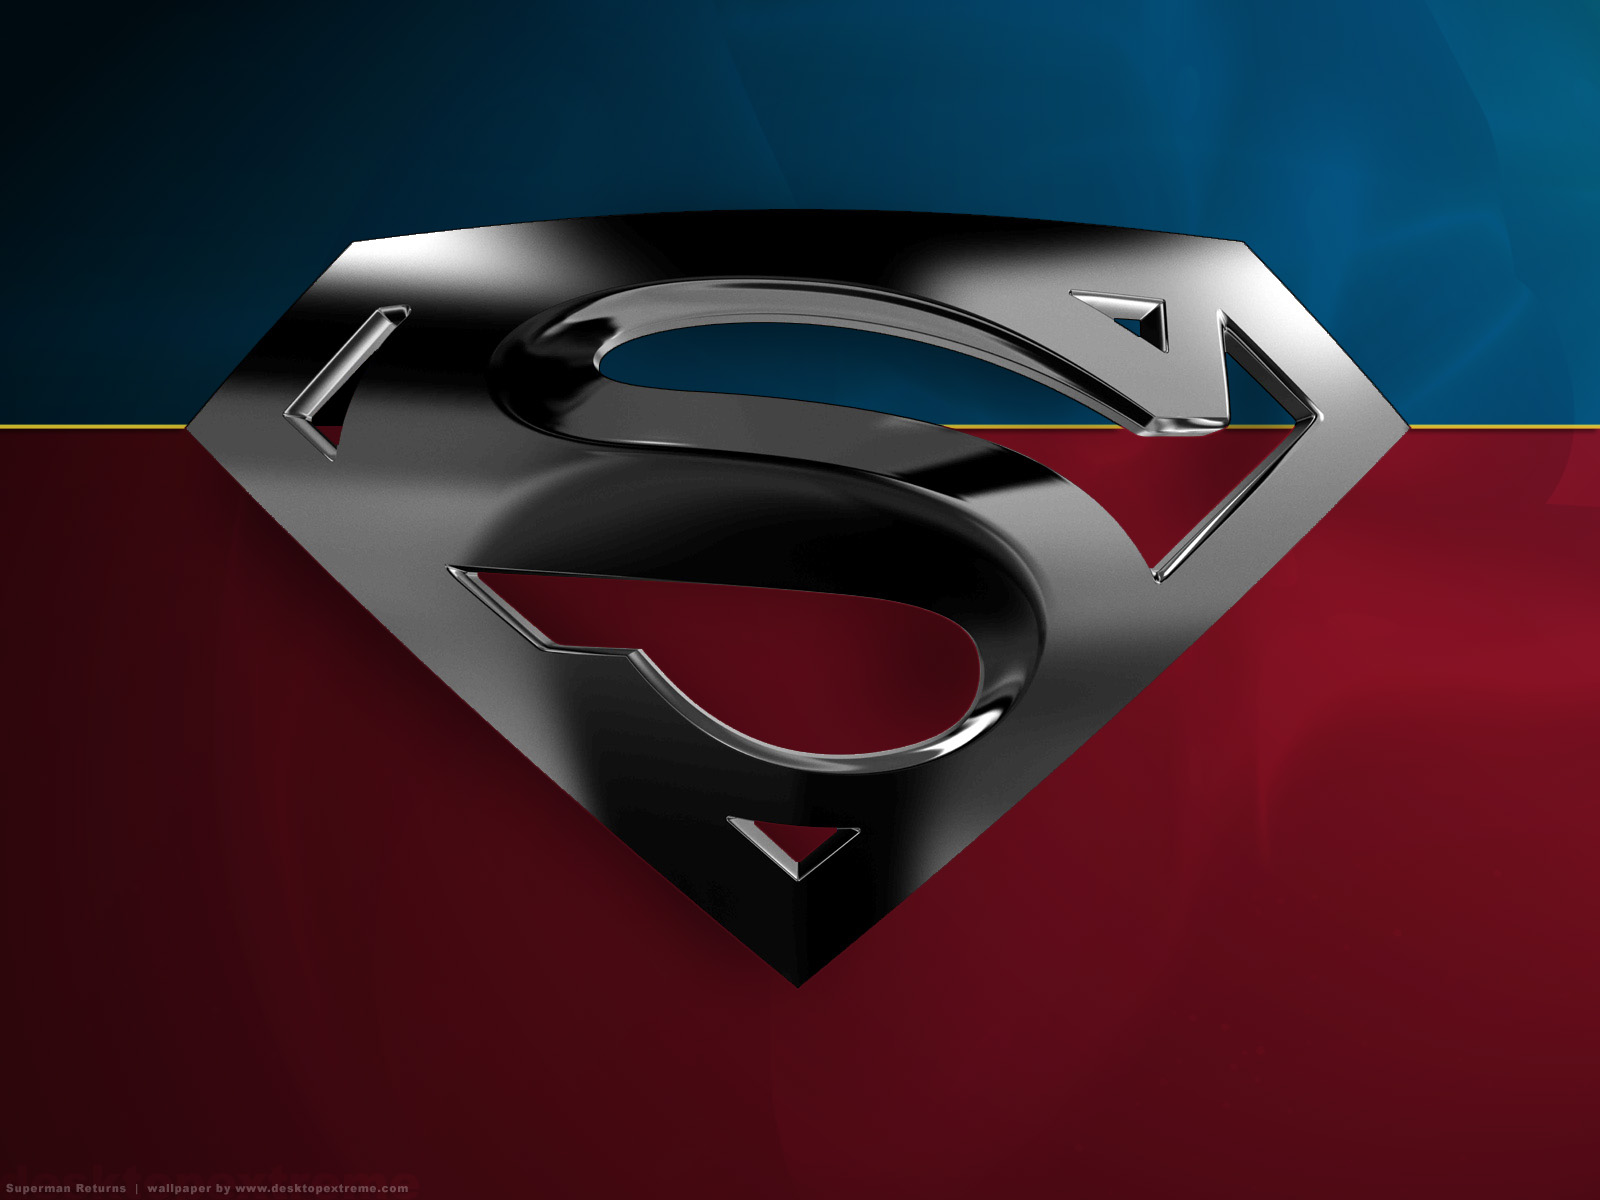 Spermen HD Logo Superman Wallpaper   Hd Full Resimler Galerisi 1600x1200